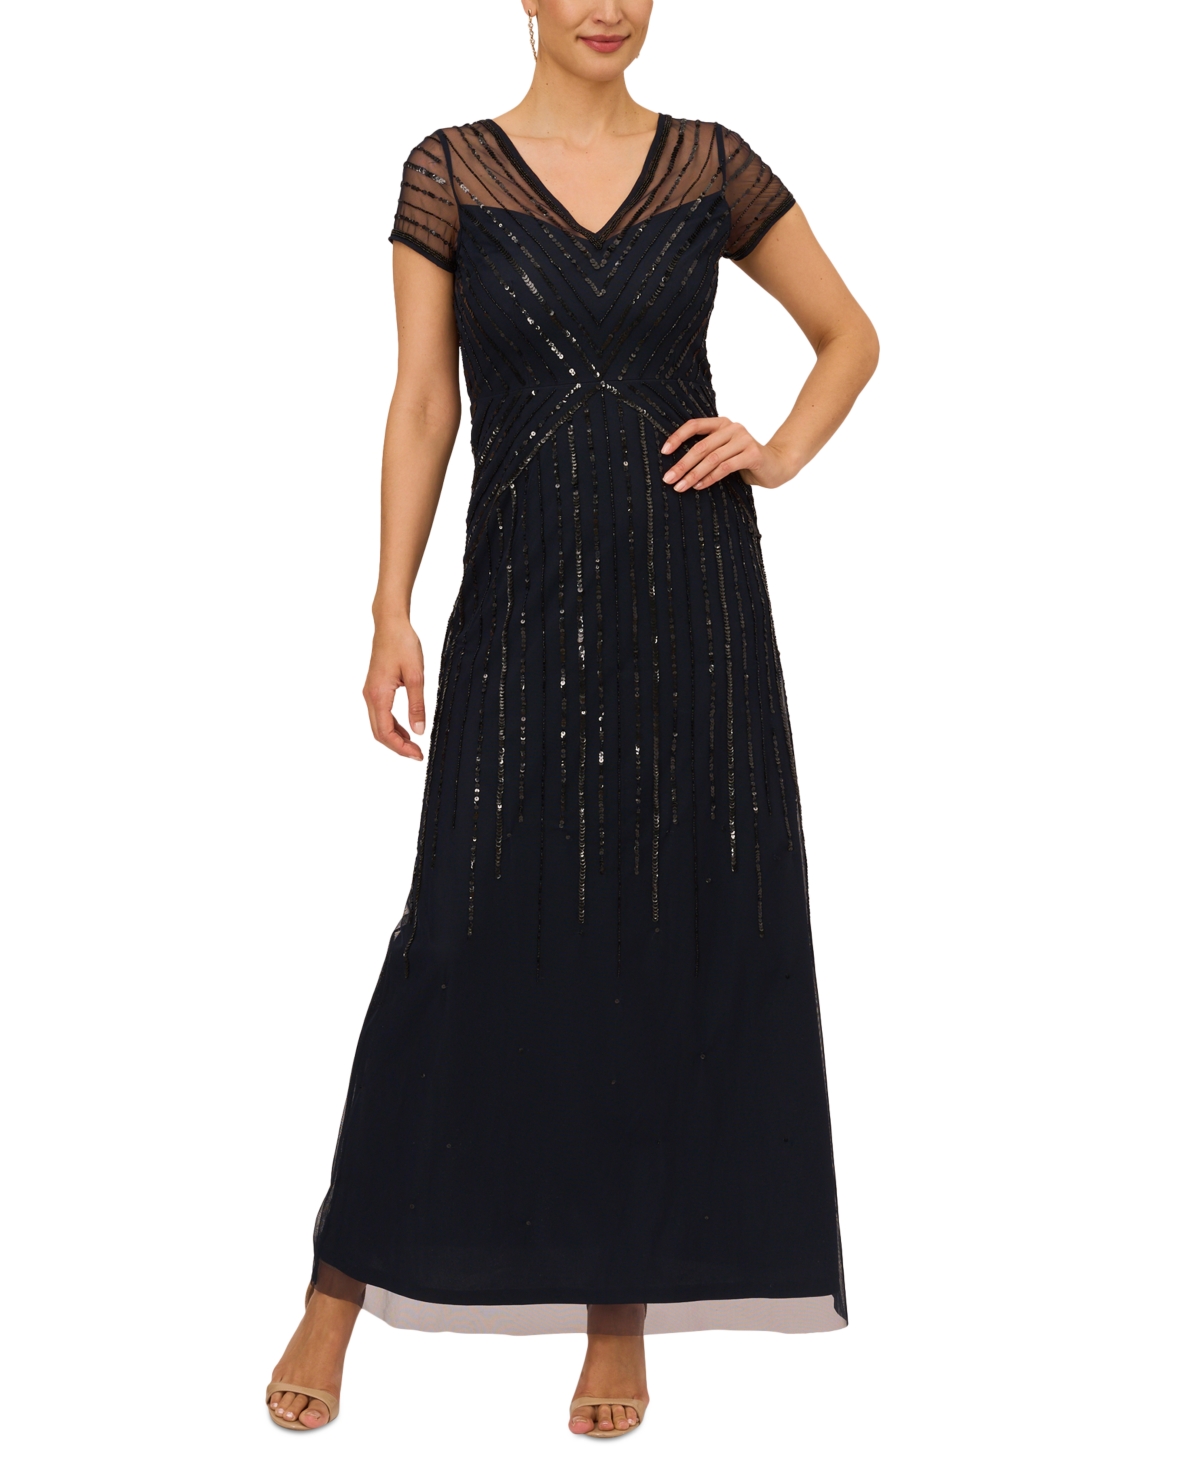 1920s Evening Dresses & Formal Gowns Papell Studio Womens V-Neck Short-Sleeve Sequin Gown - MidnightBlack $159.00 AT vintagedancer.com